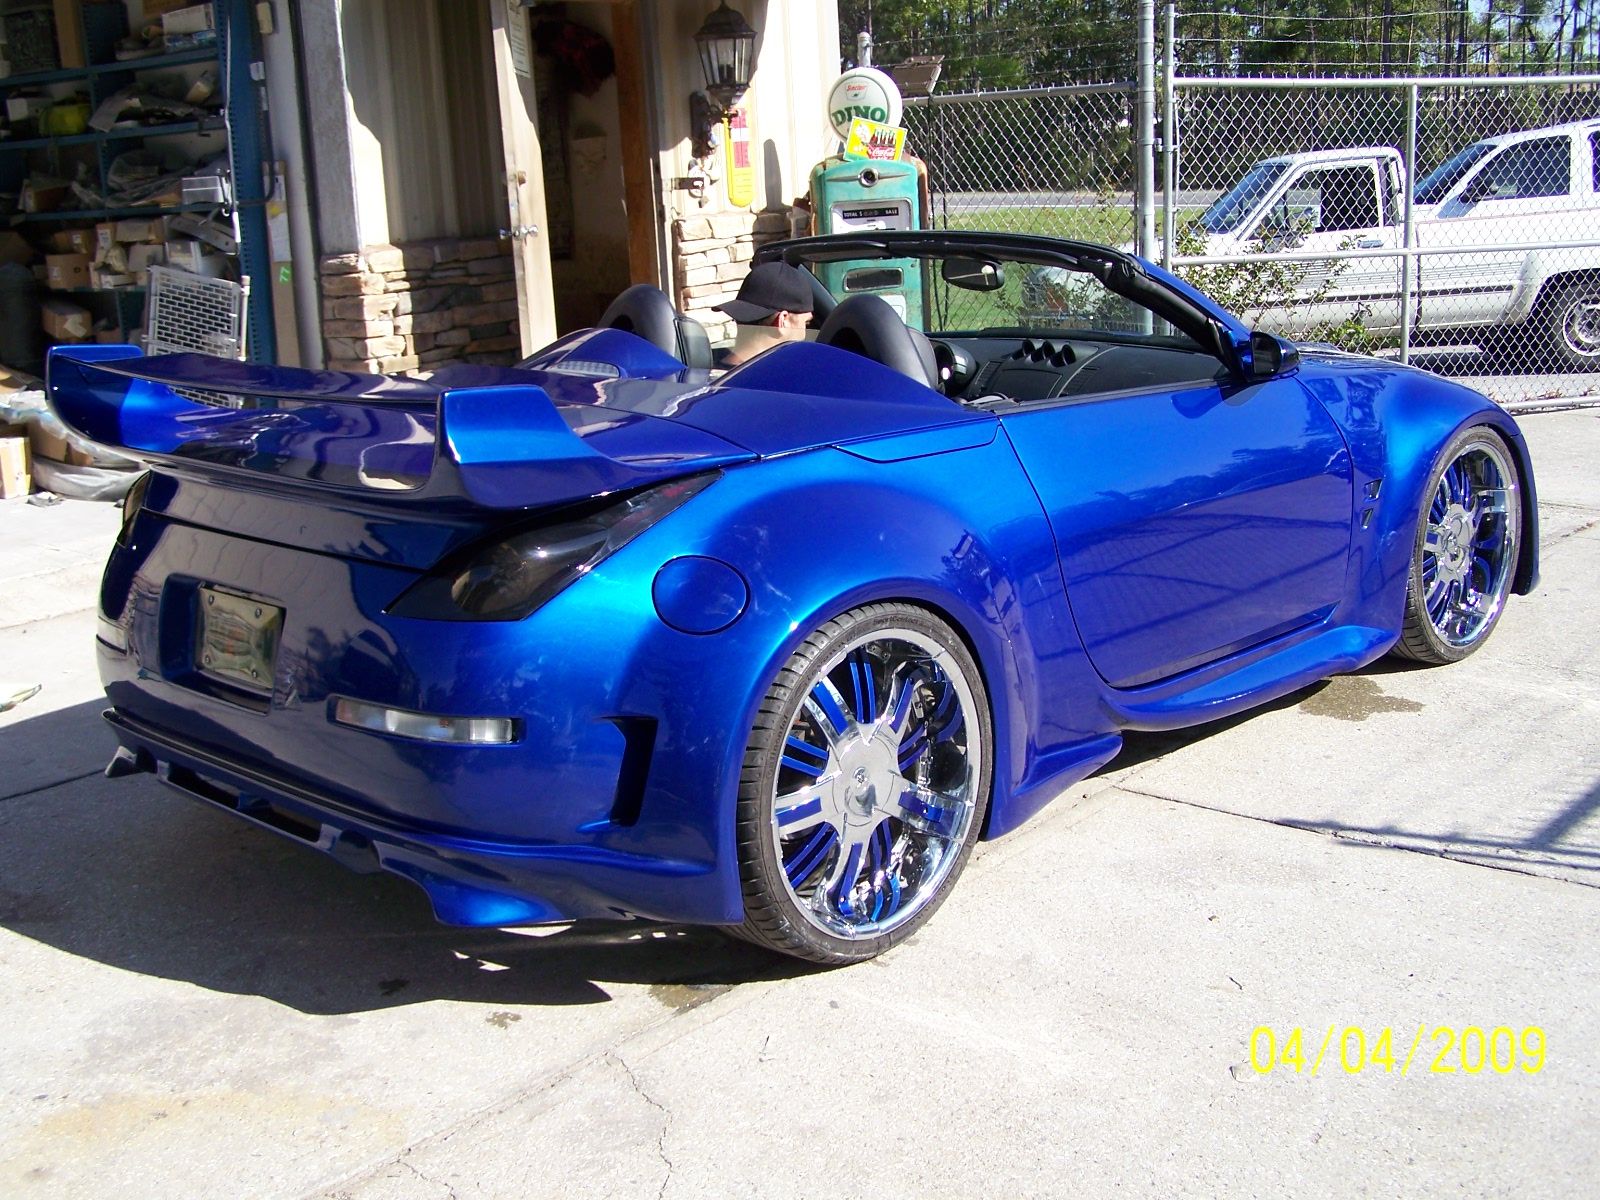 2005 Chevrolet Cobalt Exterior Paint Colors And Interior Trim Colors Autobytel Com